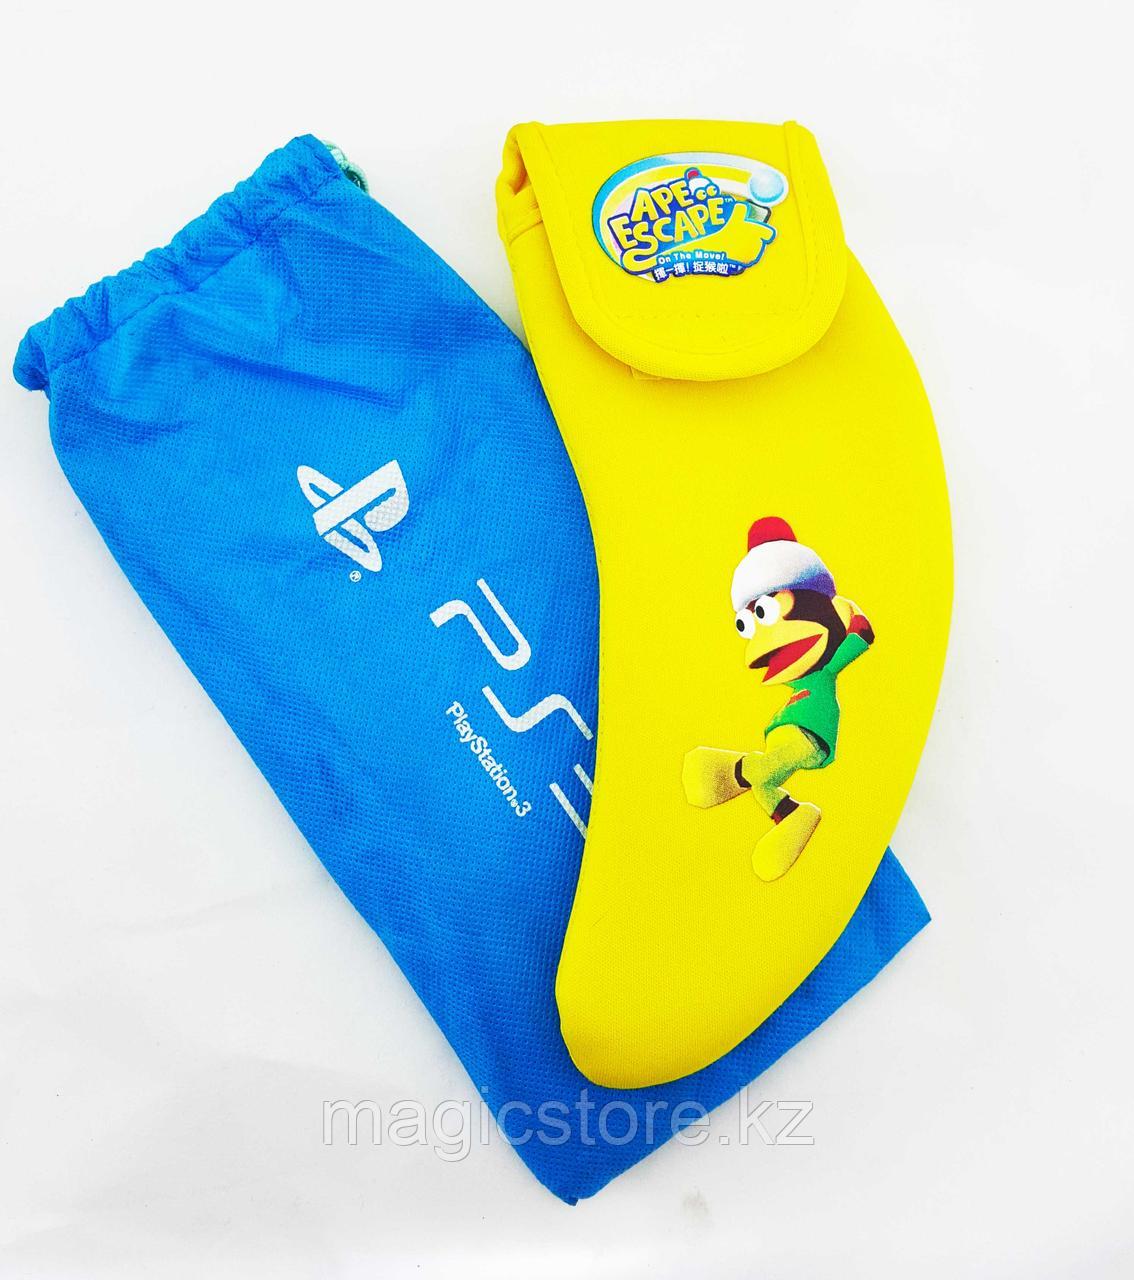 Чехол для джойстика Move Sony PlayStation 3 APE Escape,в виде банана, желтый, PS3